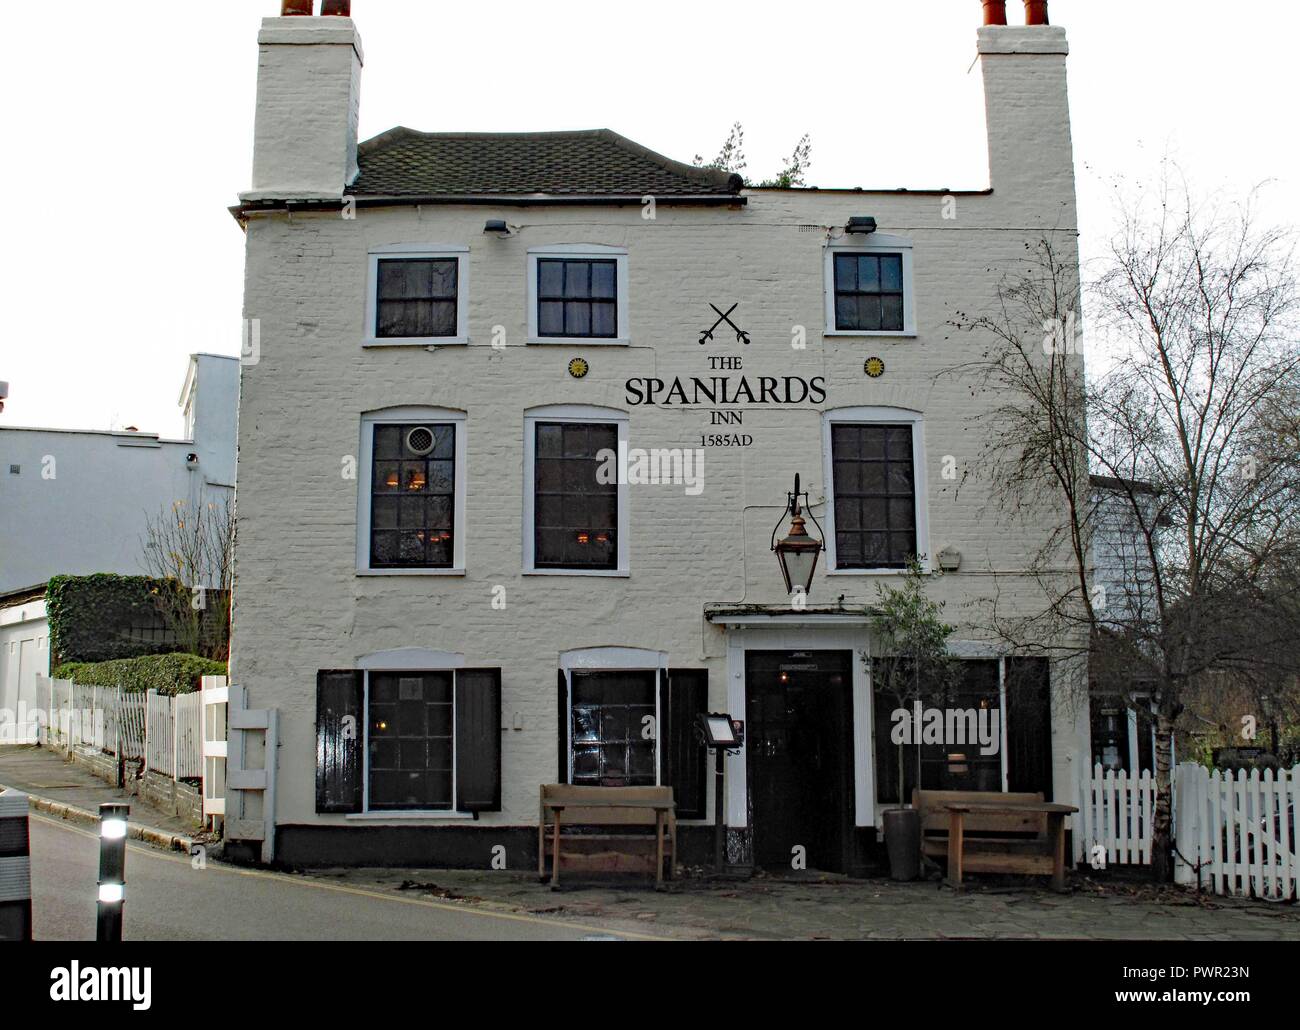 The Spaniards Inn 1585AD Hampstead NW3 Stock Photo